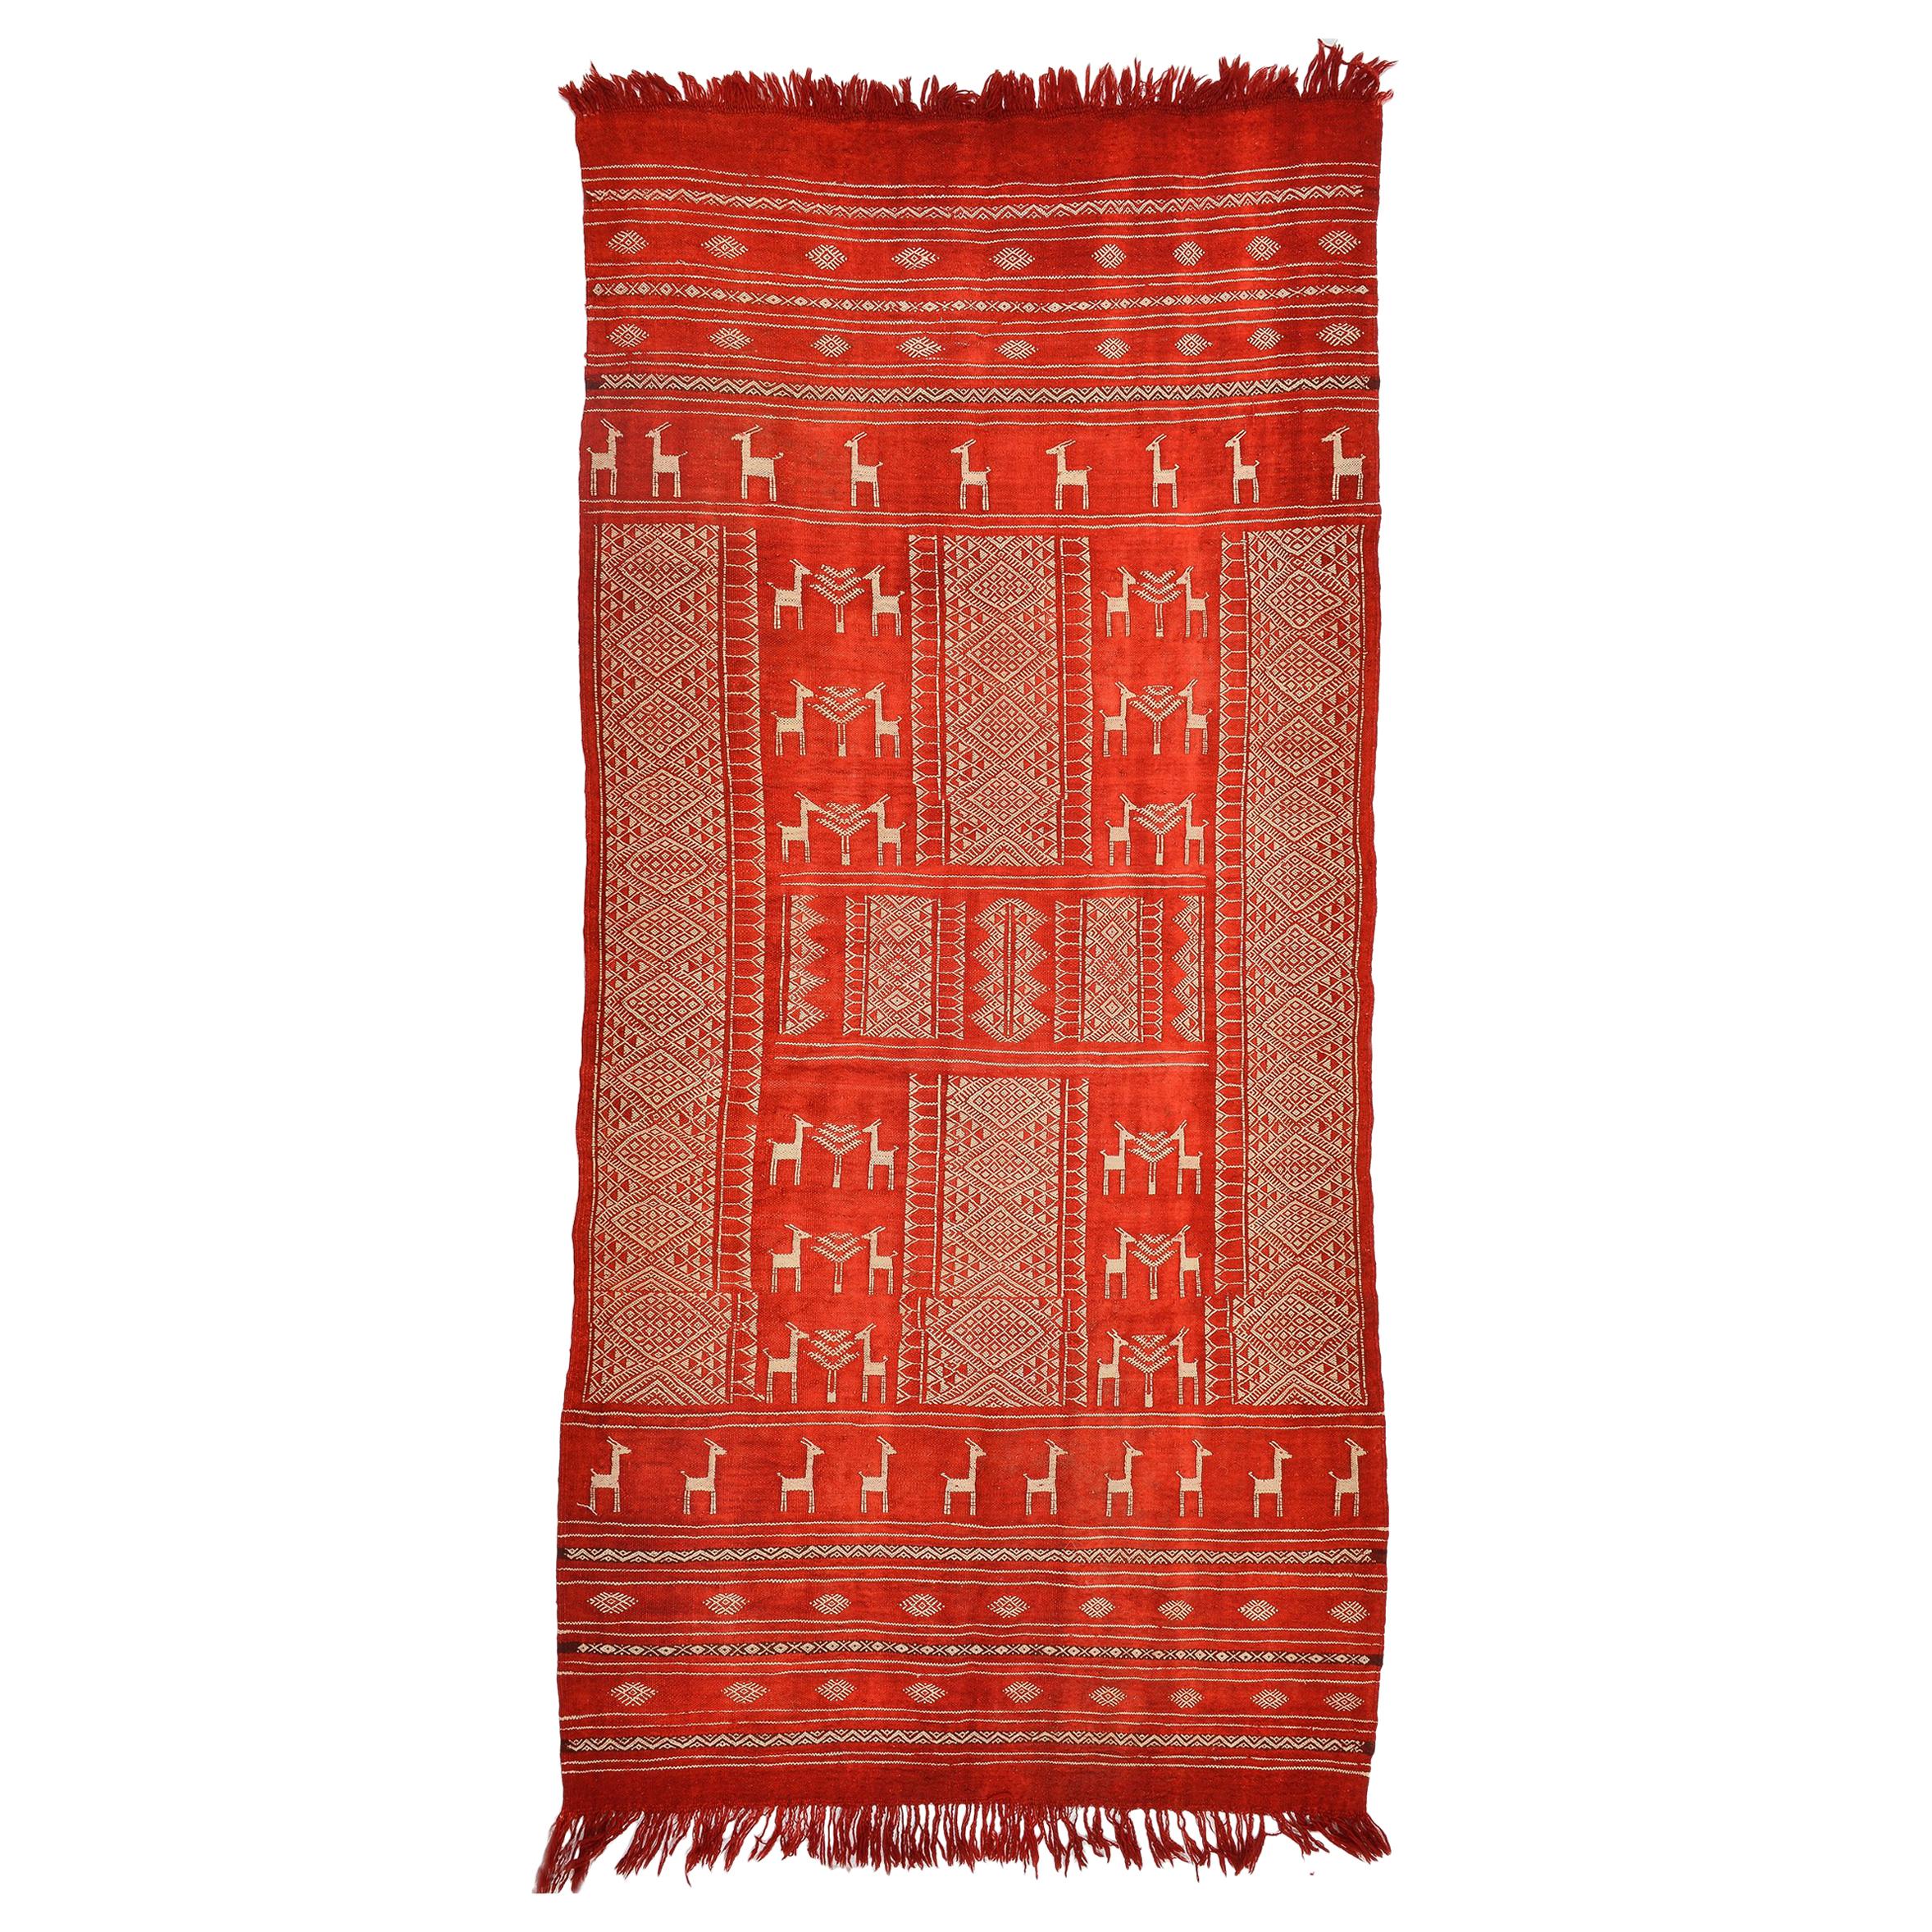 Vintage Rare Embroidered Moroccan Tissue